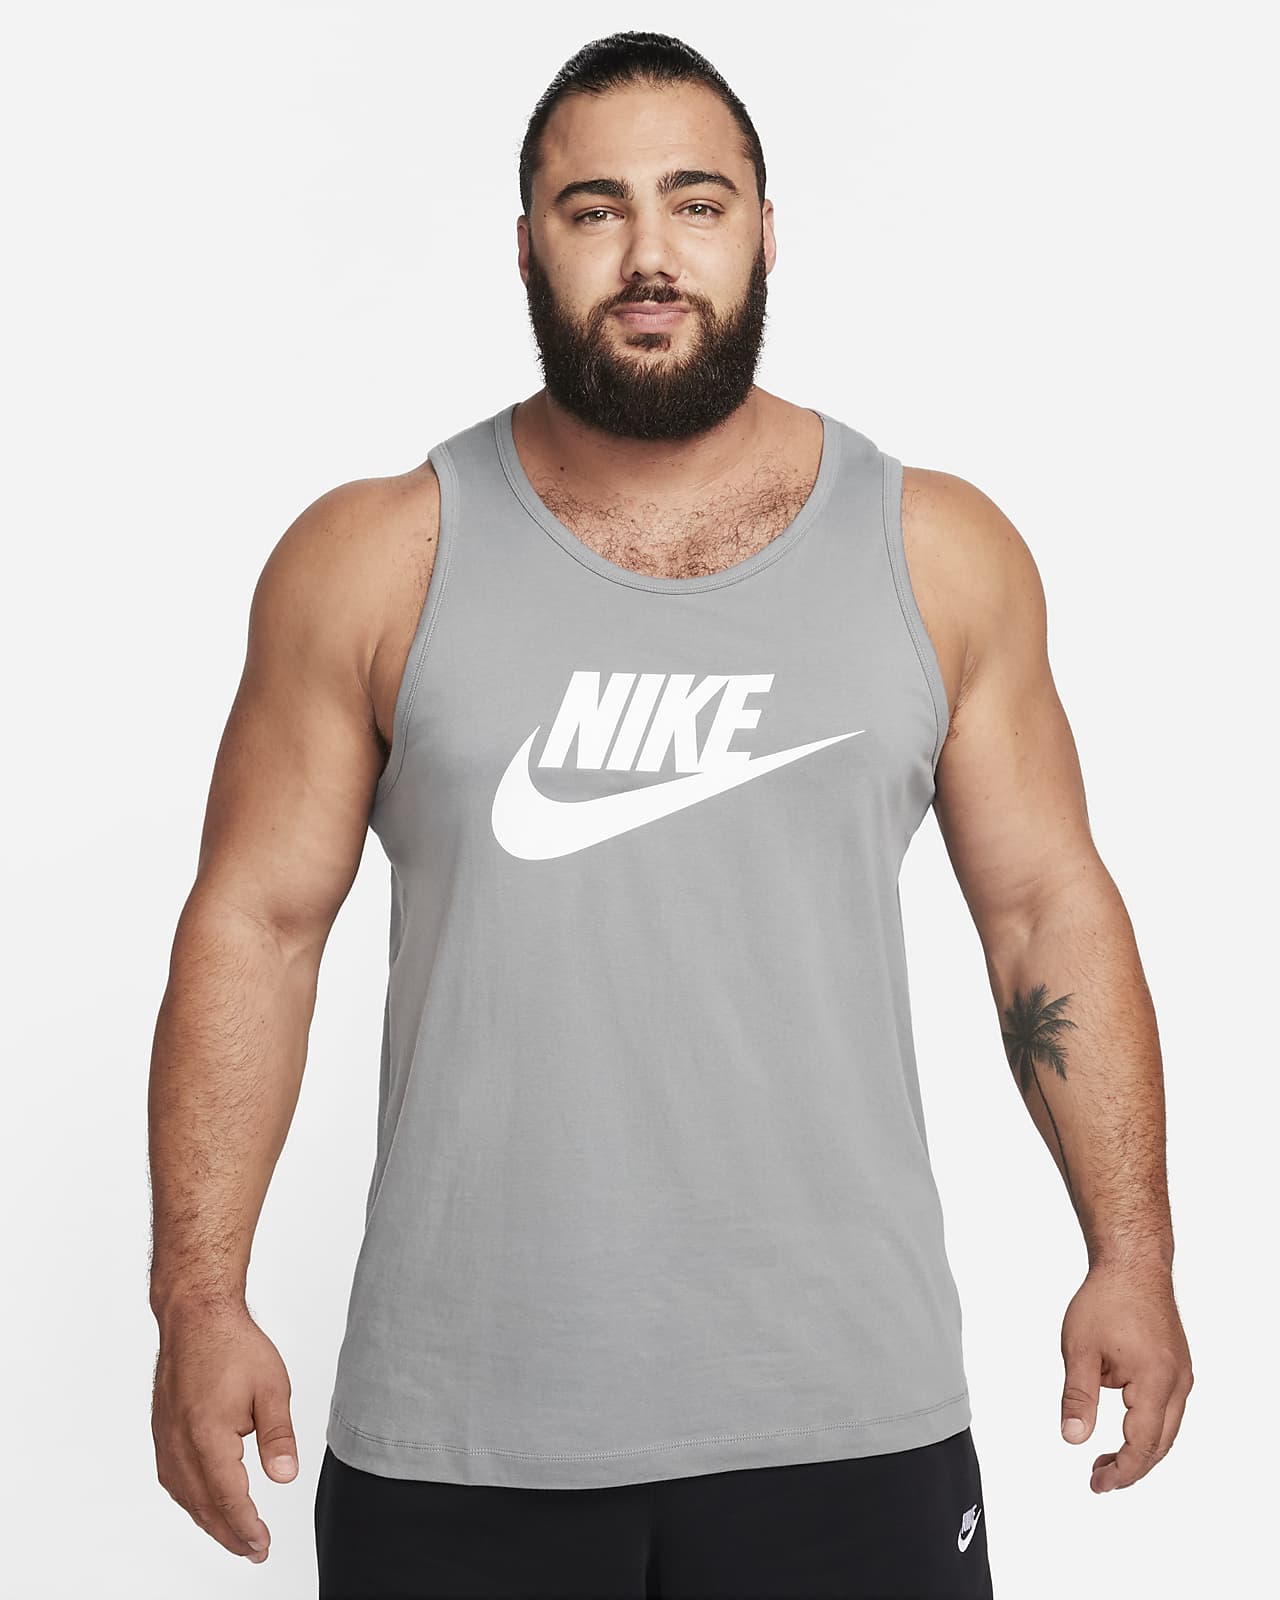 Nike Men's Tank Top - Blue - L